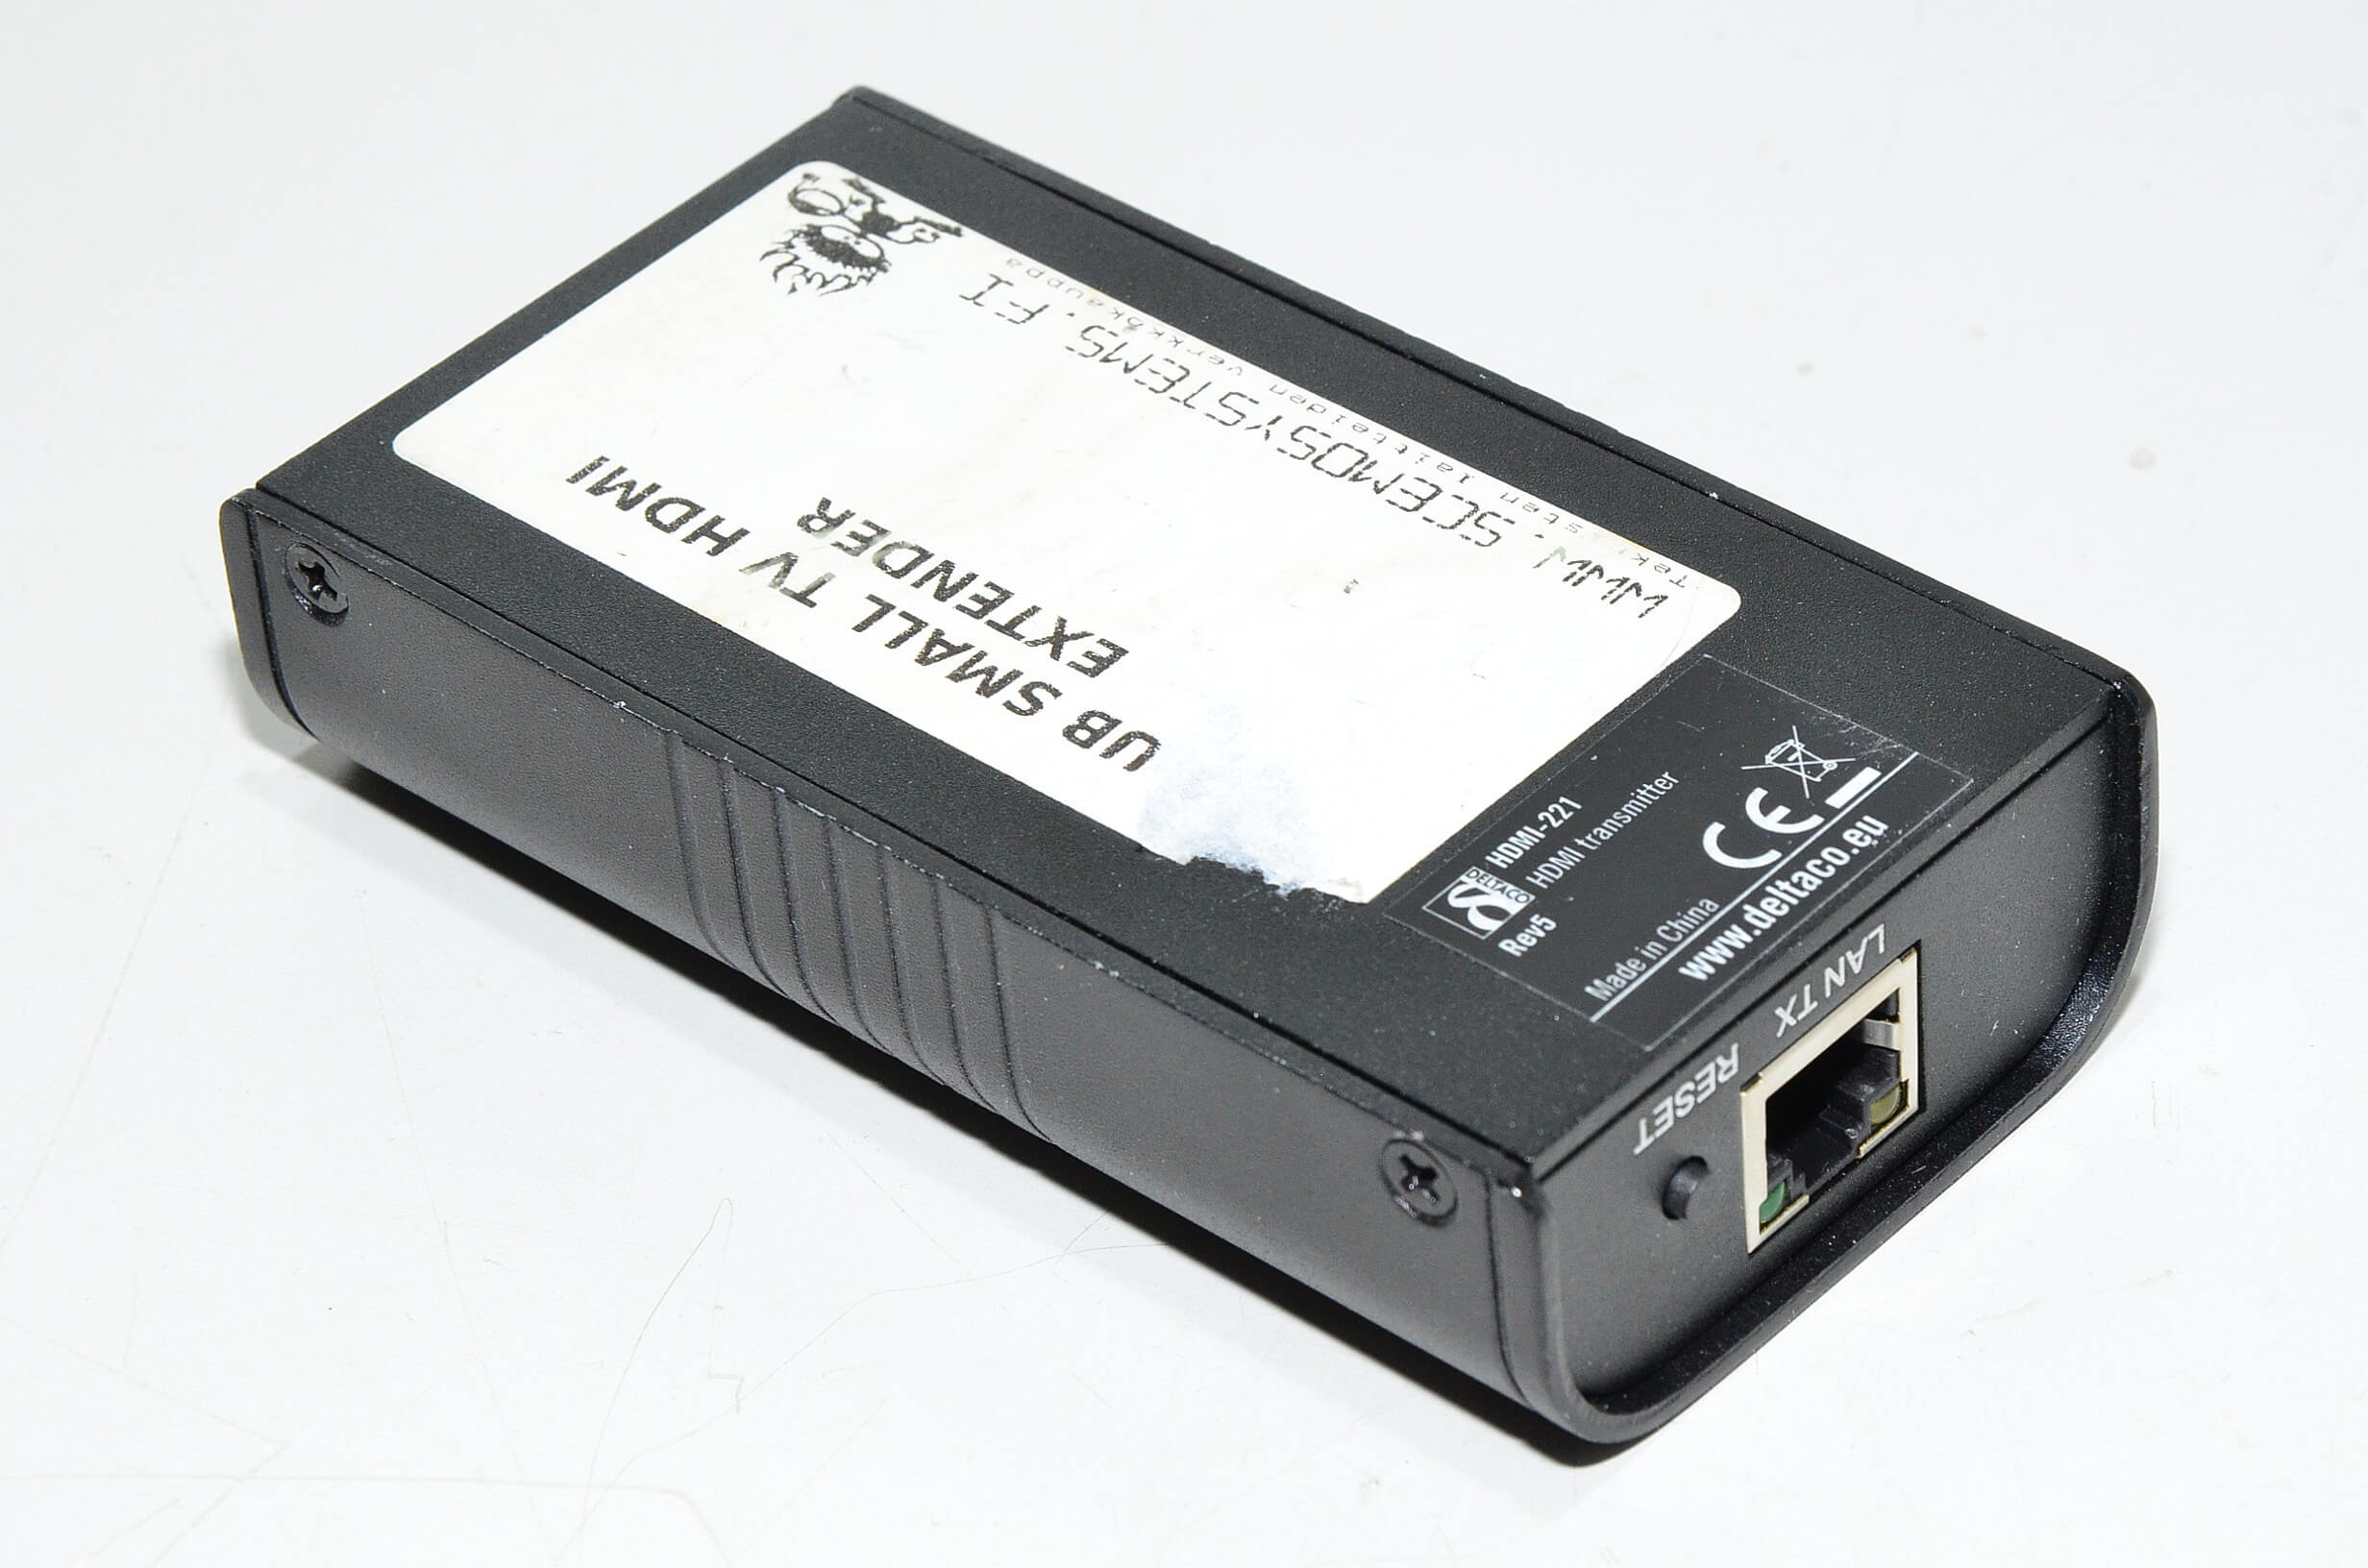 Deltaco HDMI-221 tranceiver rev5 HDMI extender (local 120m/100m/80m